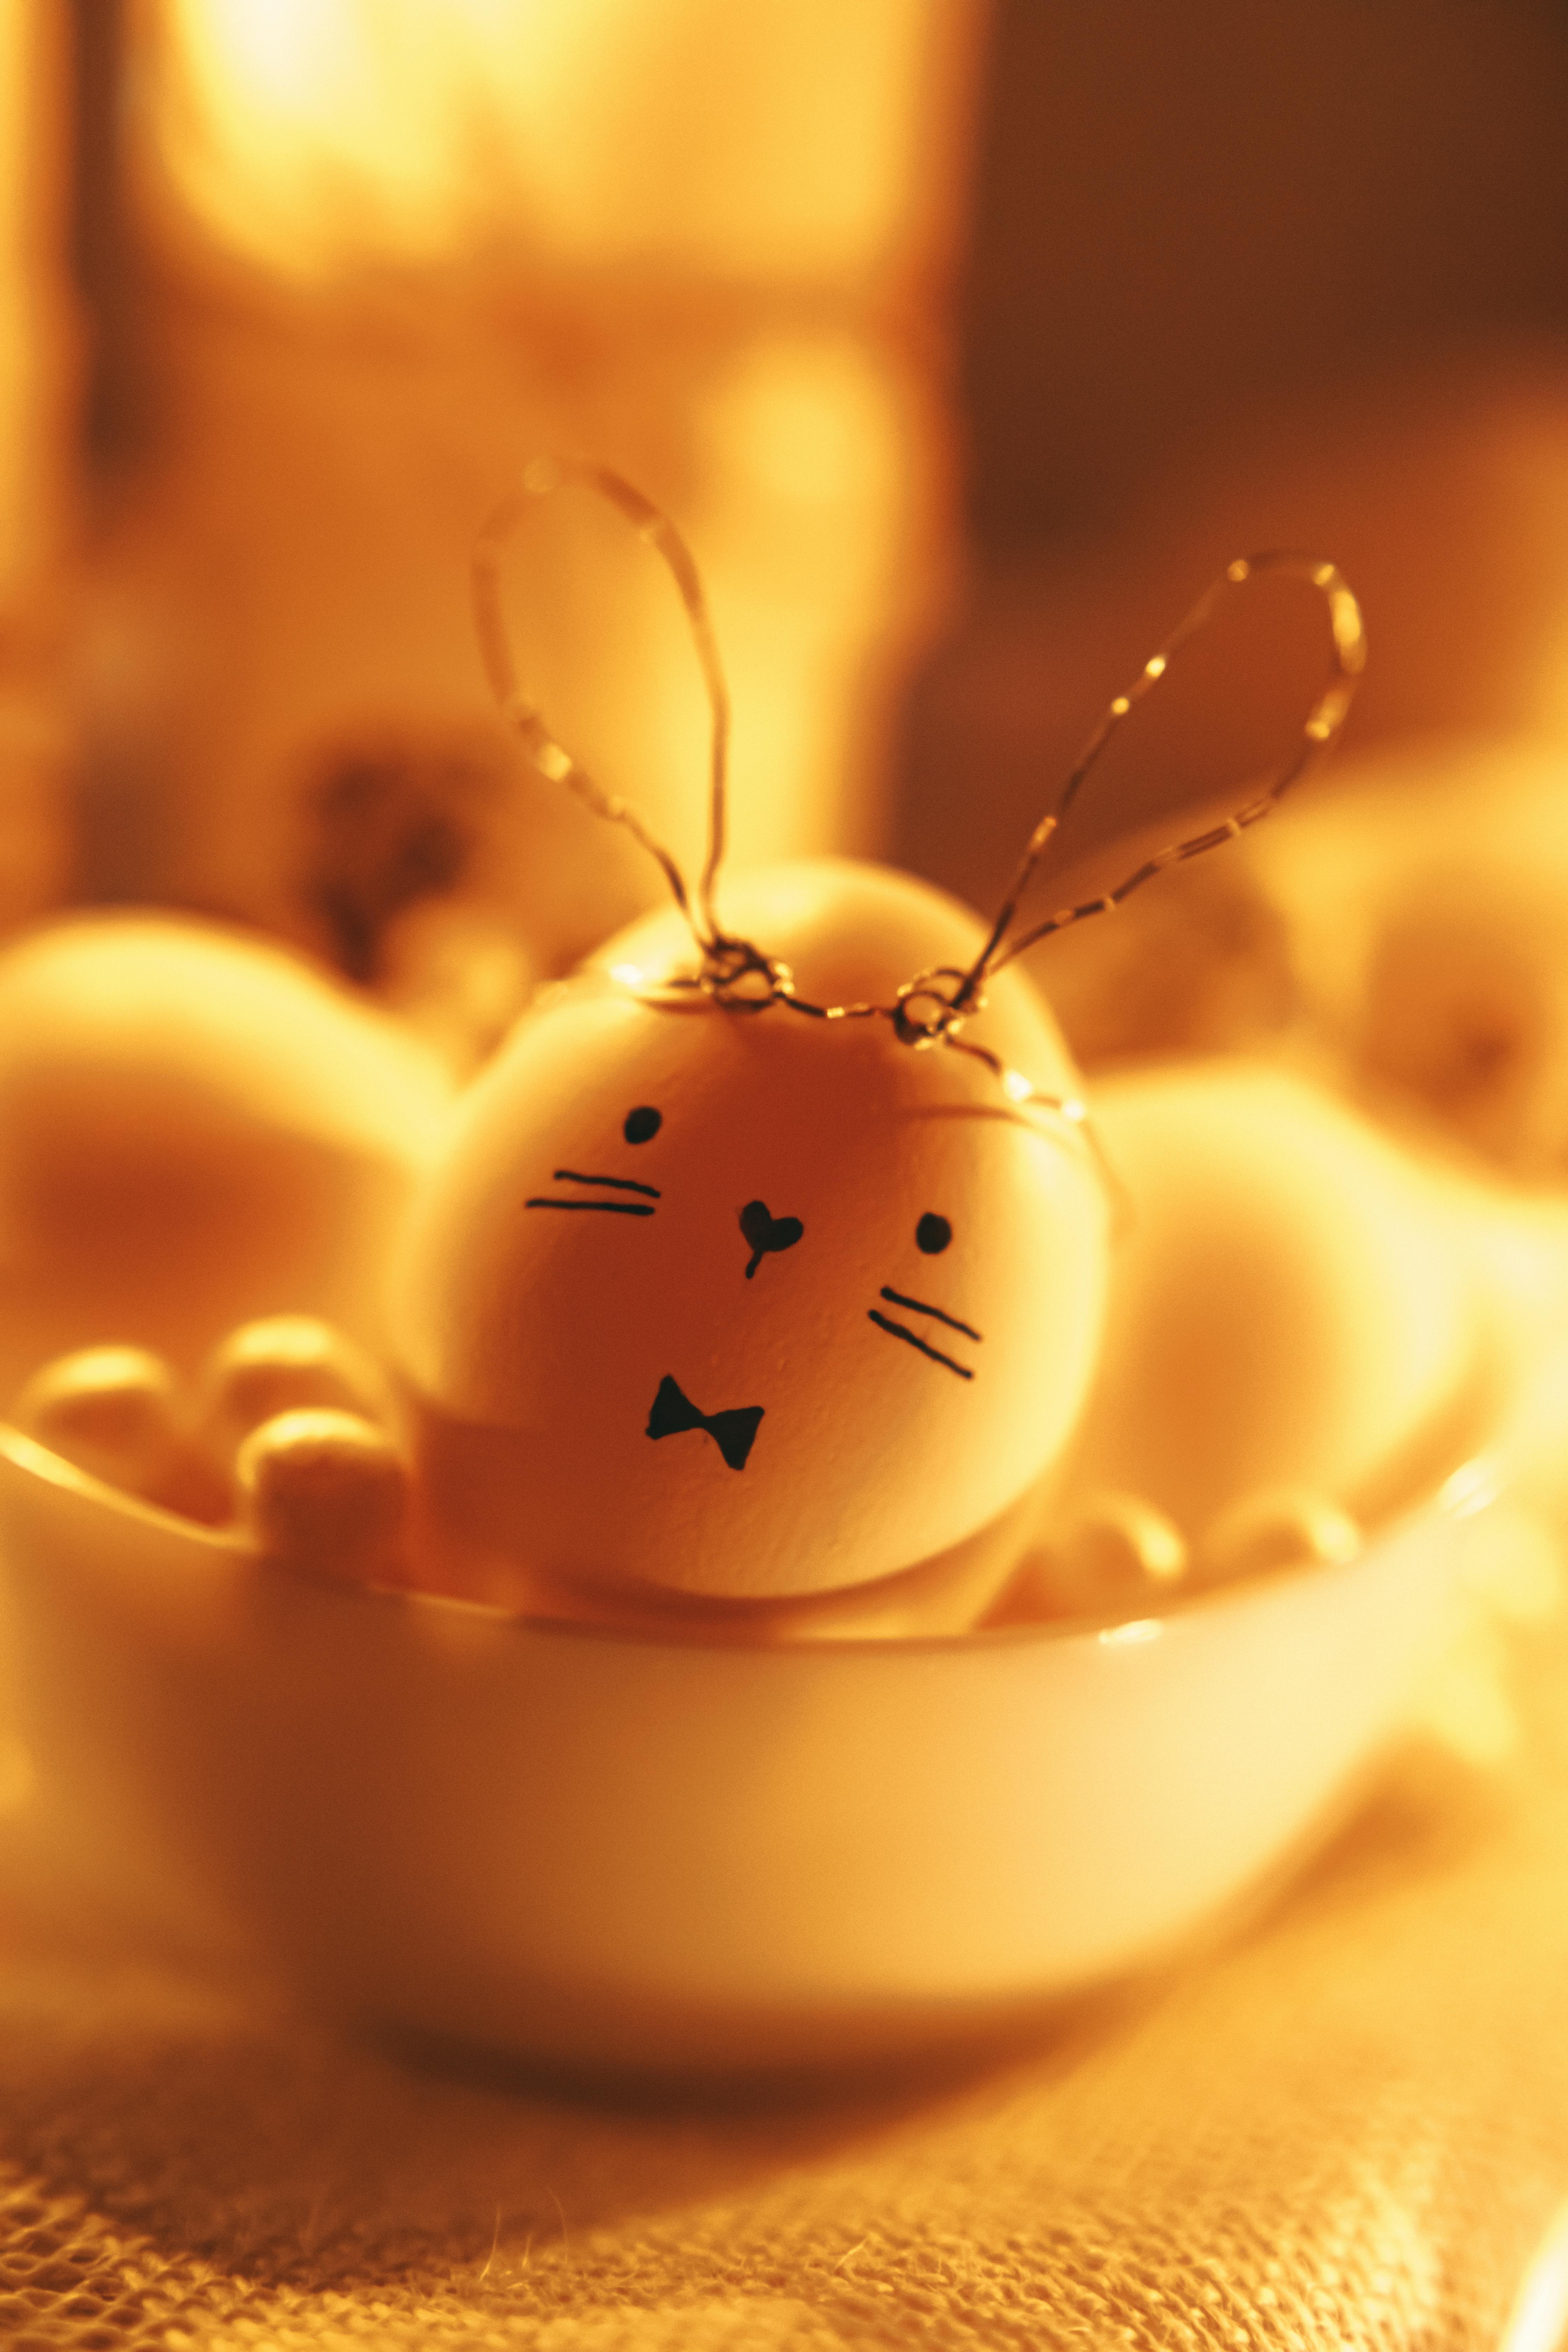 golden easter bunny egg in a bowl